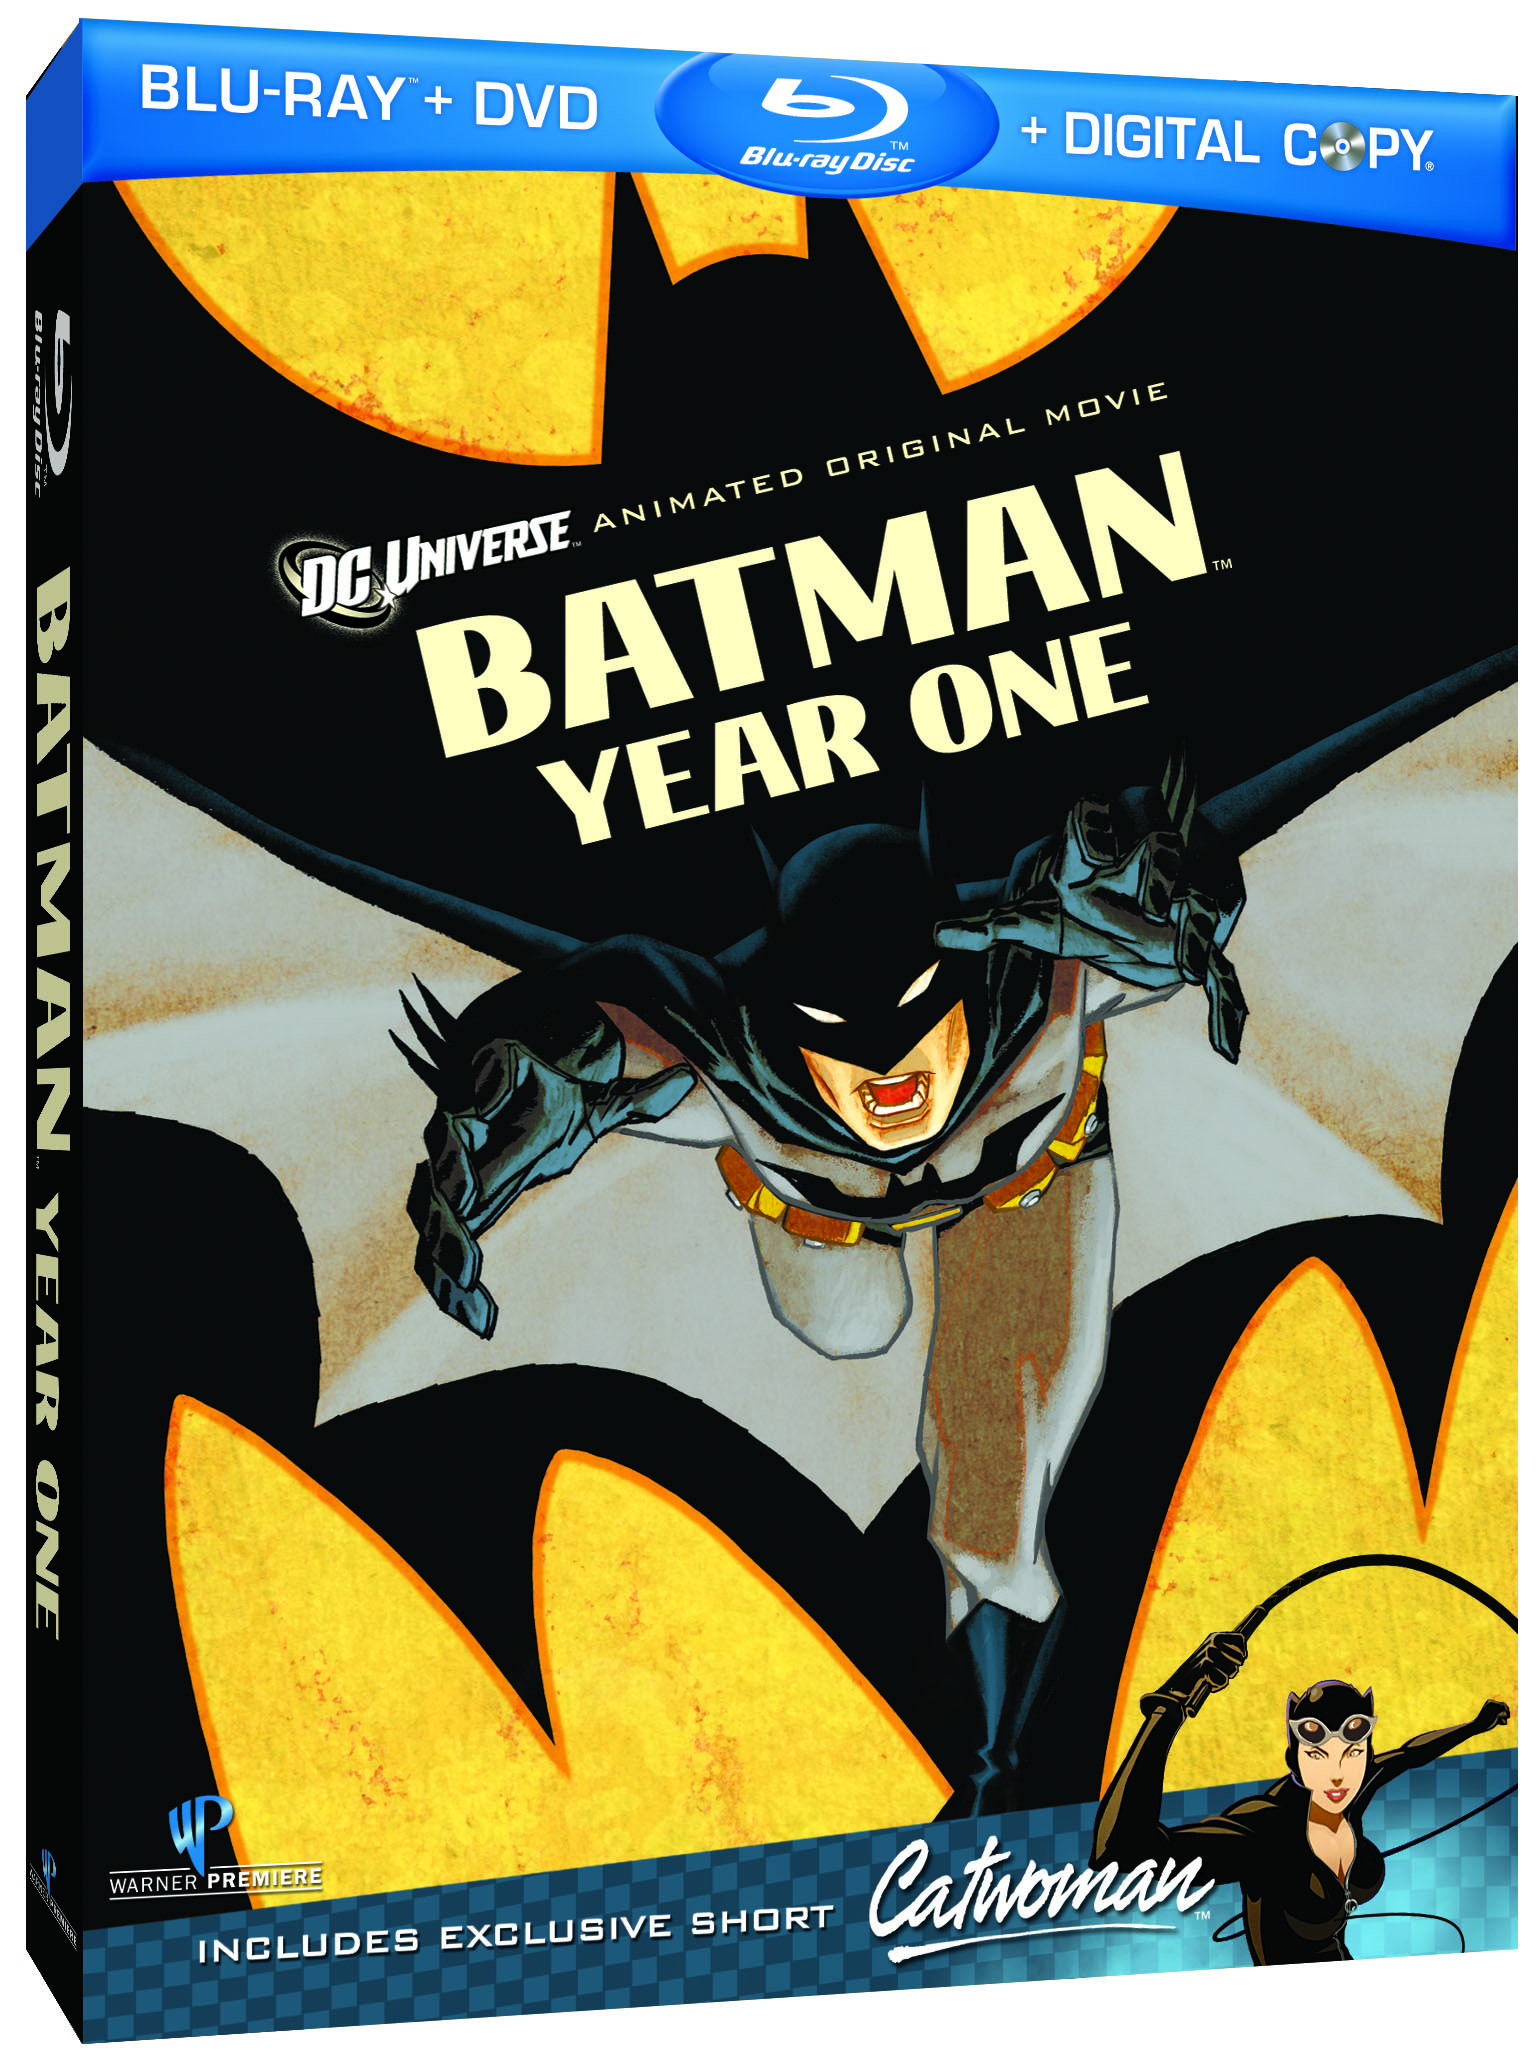 Batman: Year One Blu-ray Cover Art